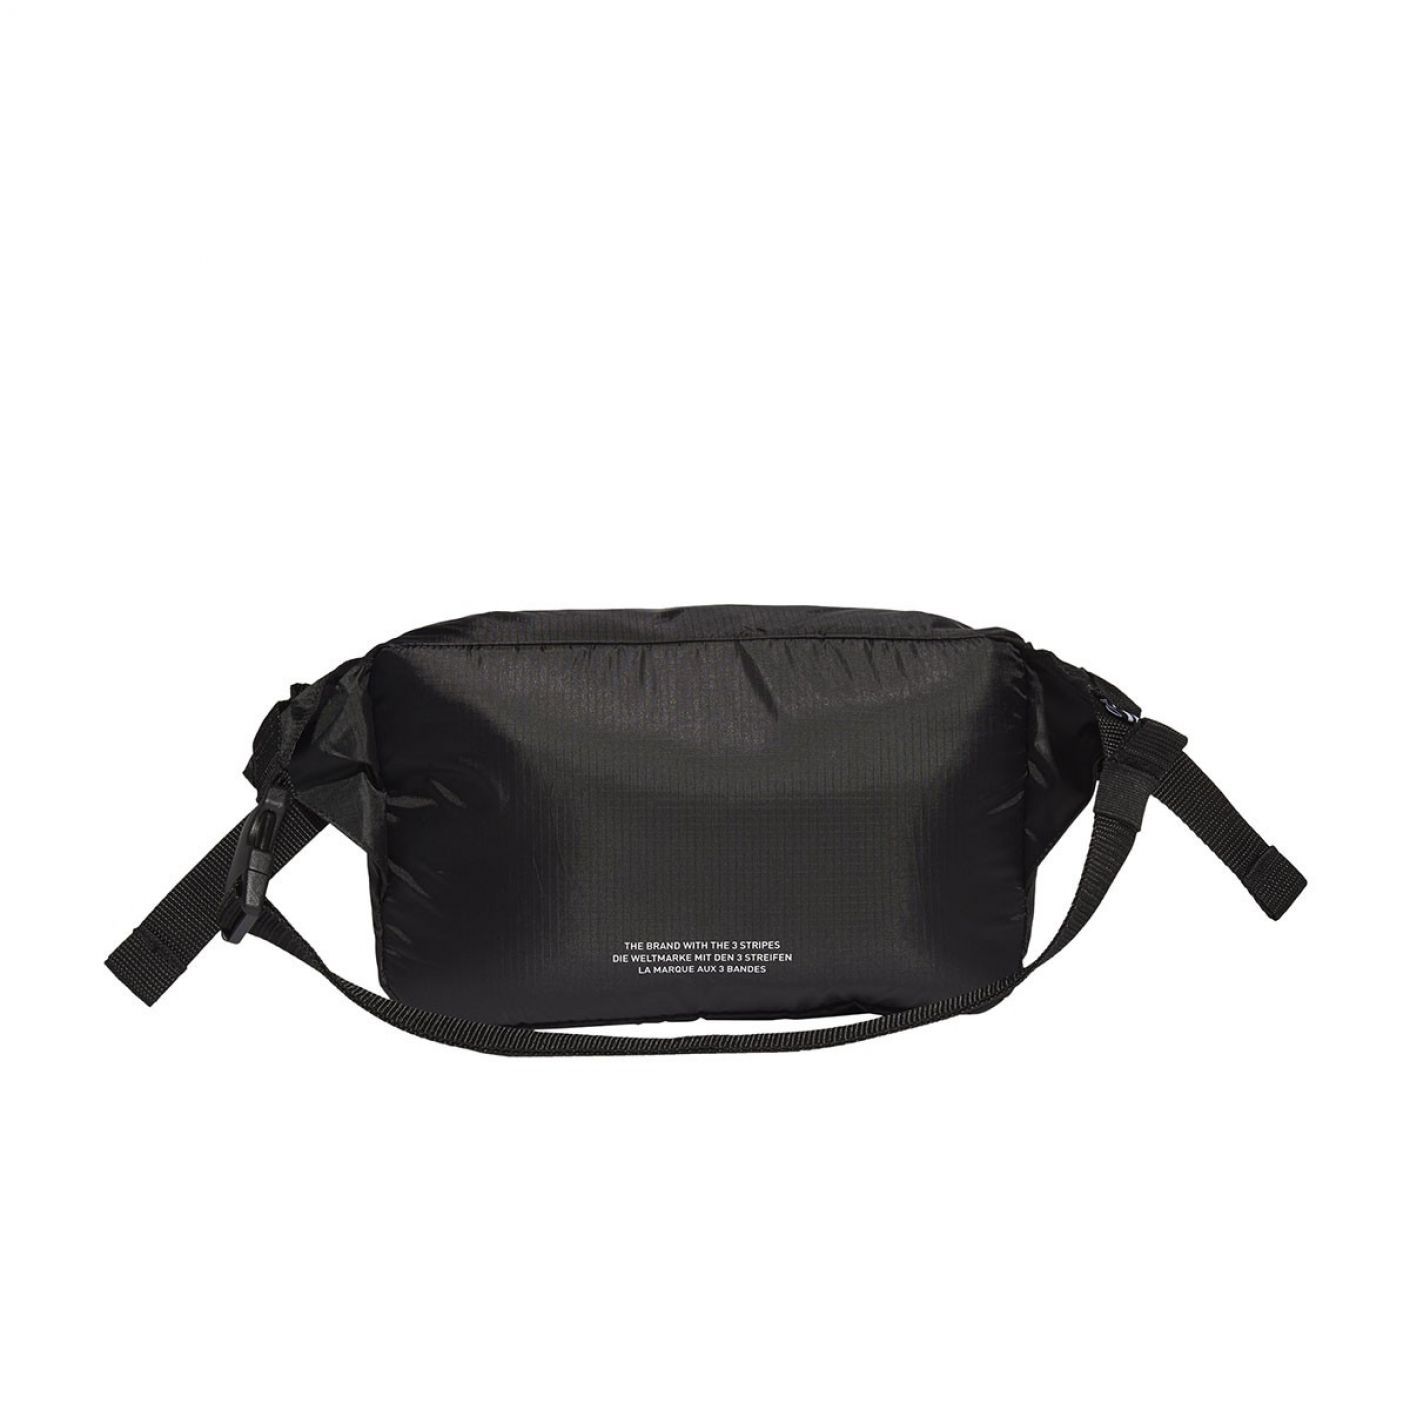 Adidas Premium Waistbag Essentials Black White